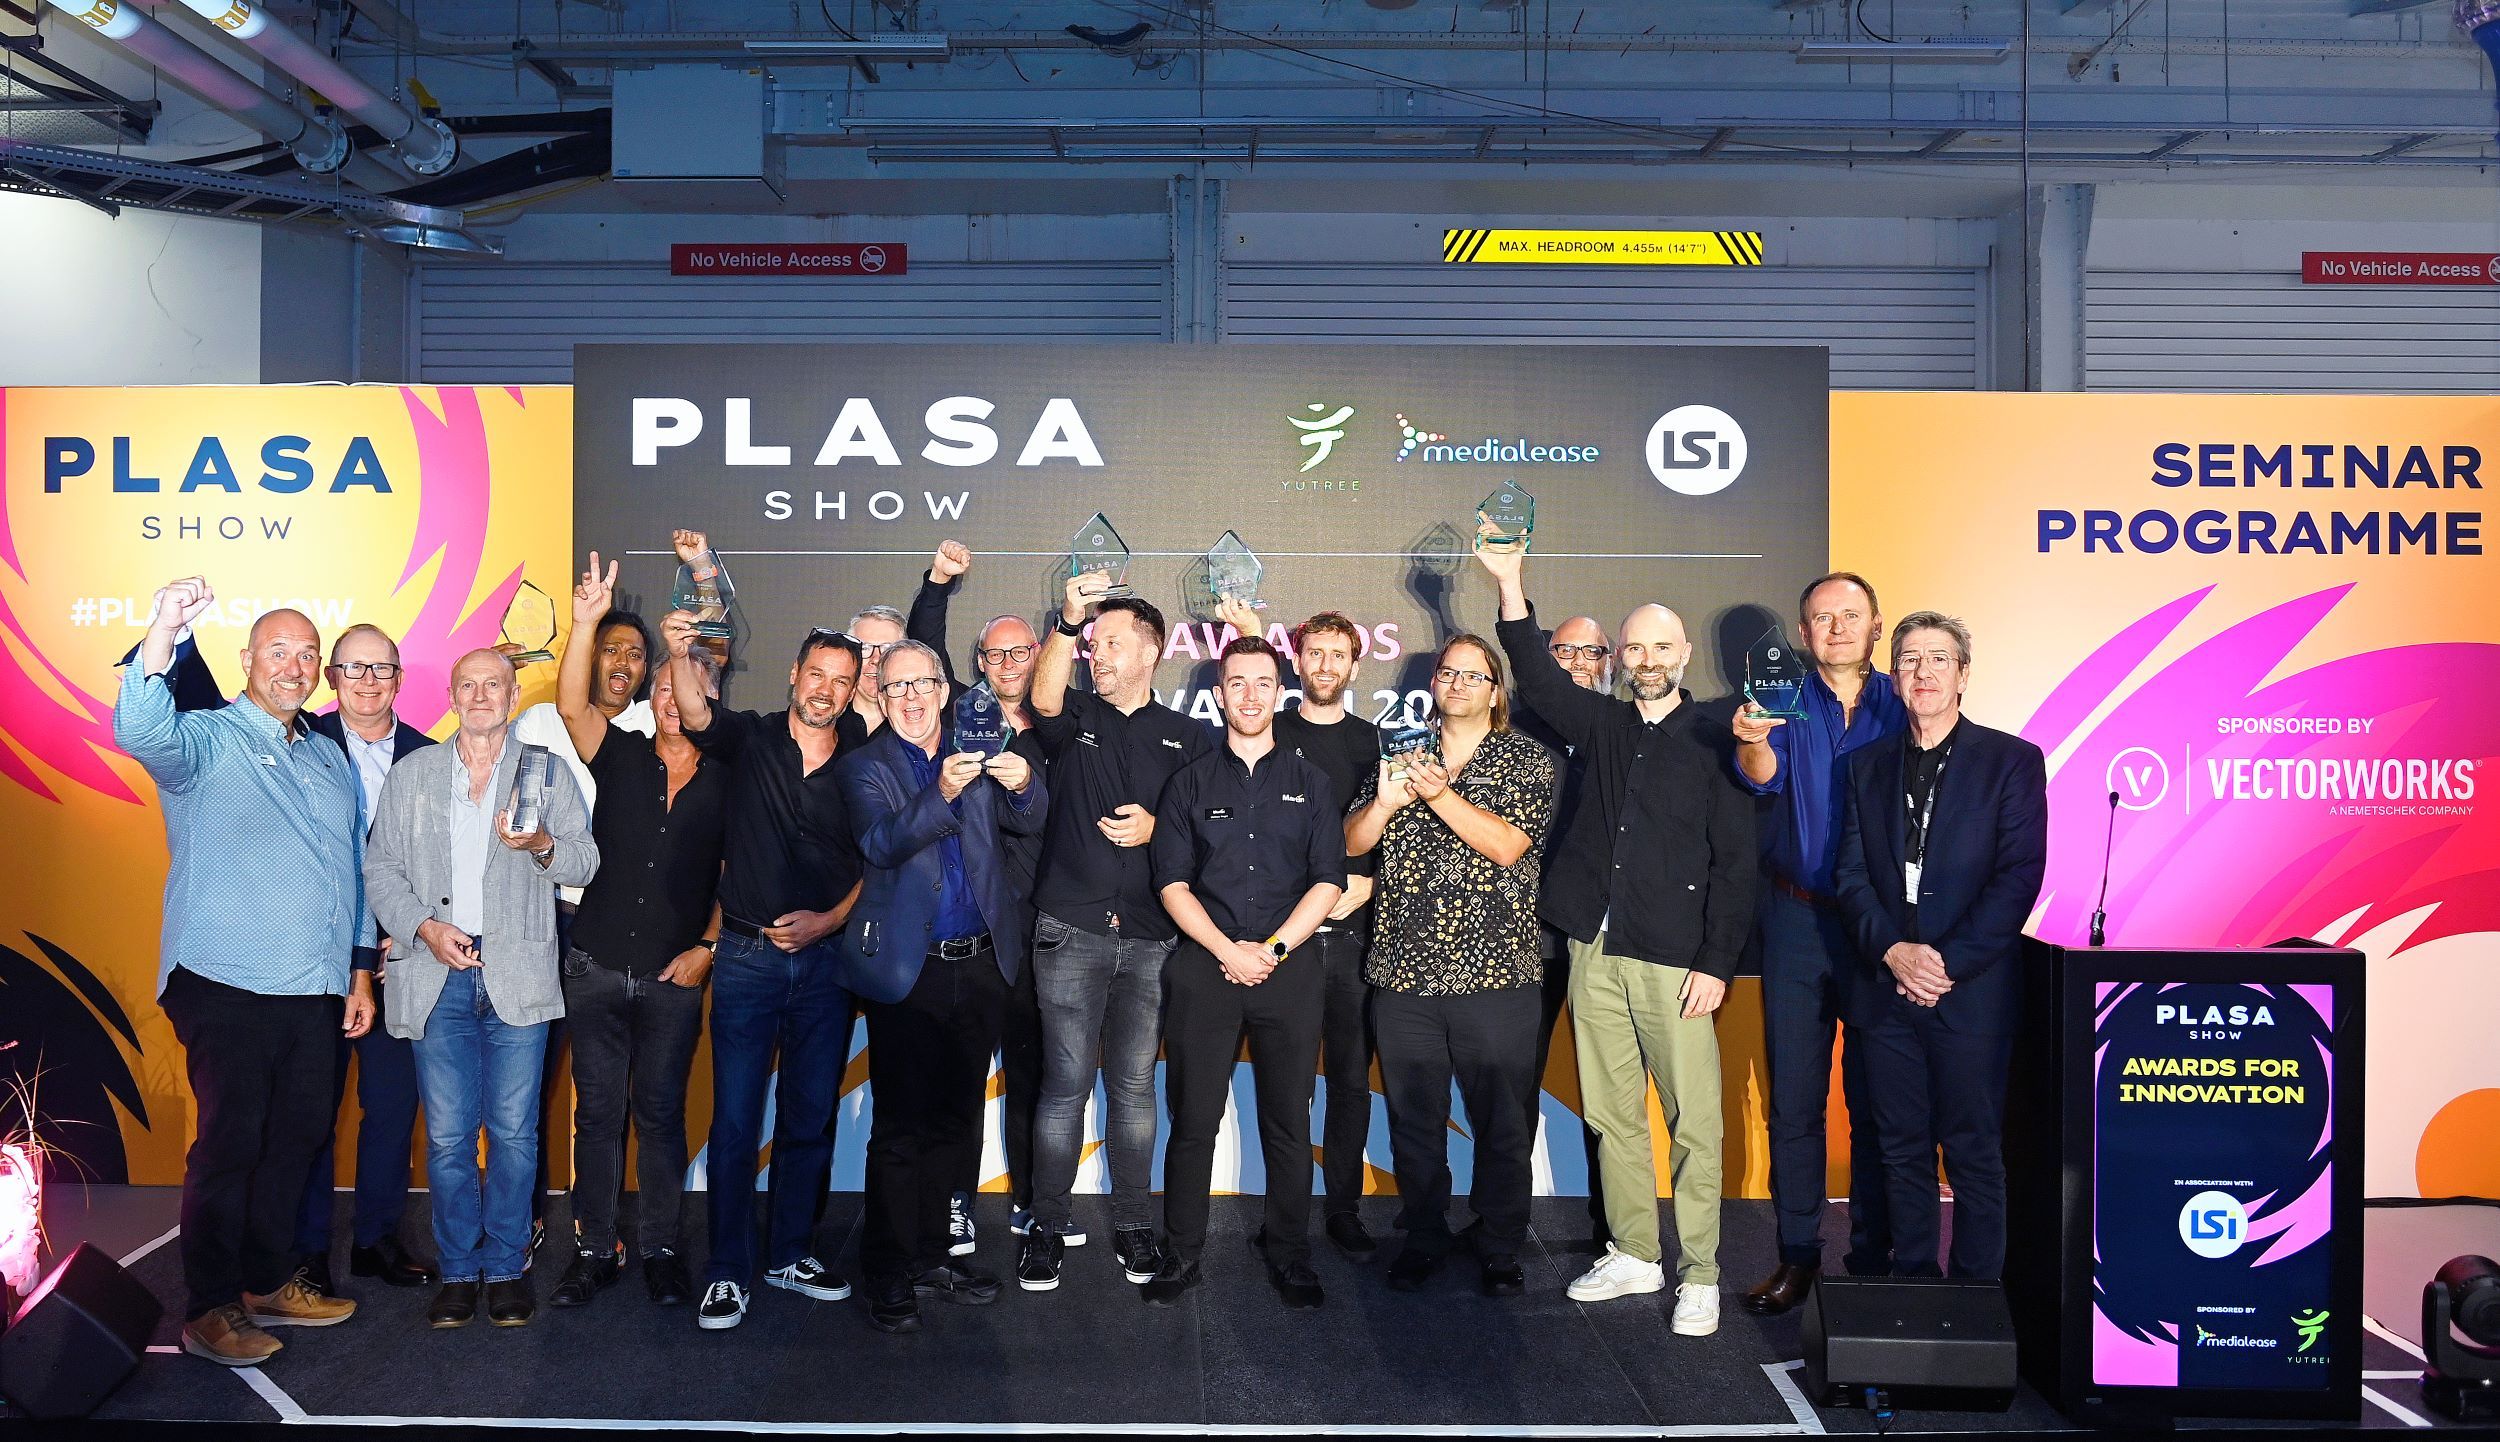 PLASA Show Innovation Award winners posing with trophies 2023